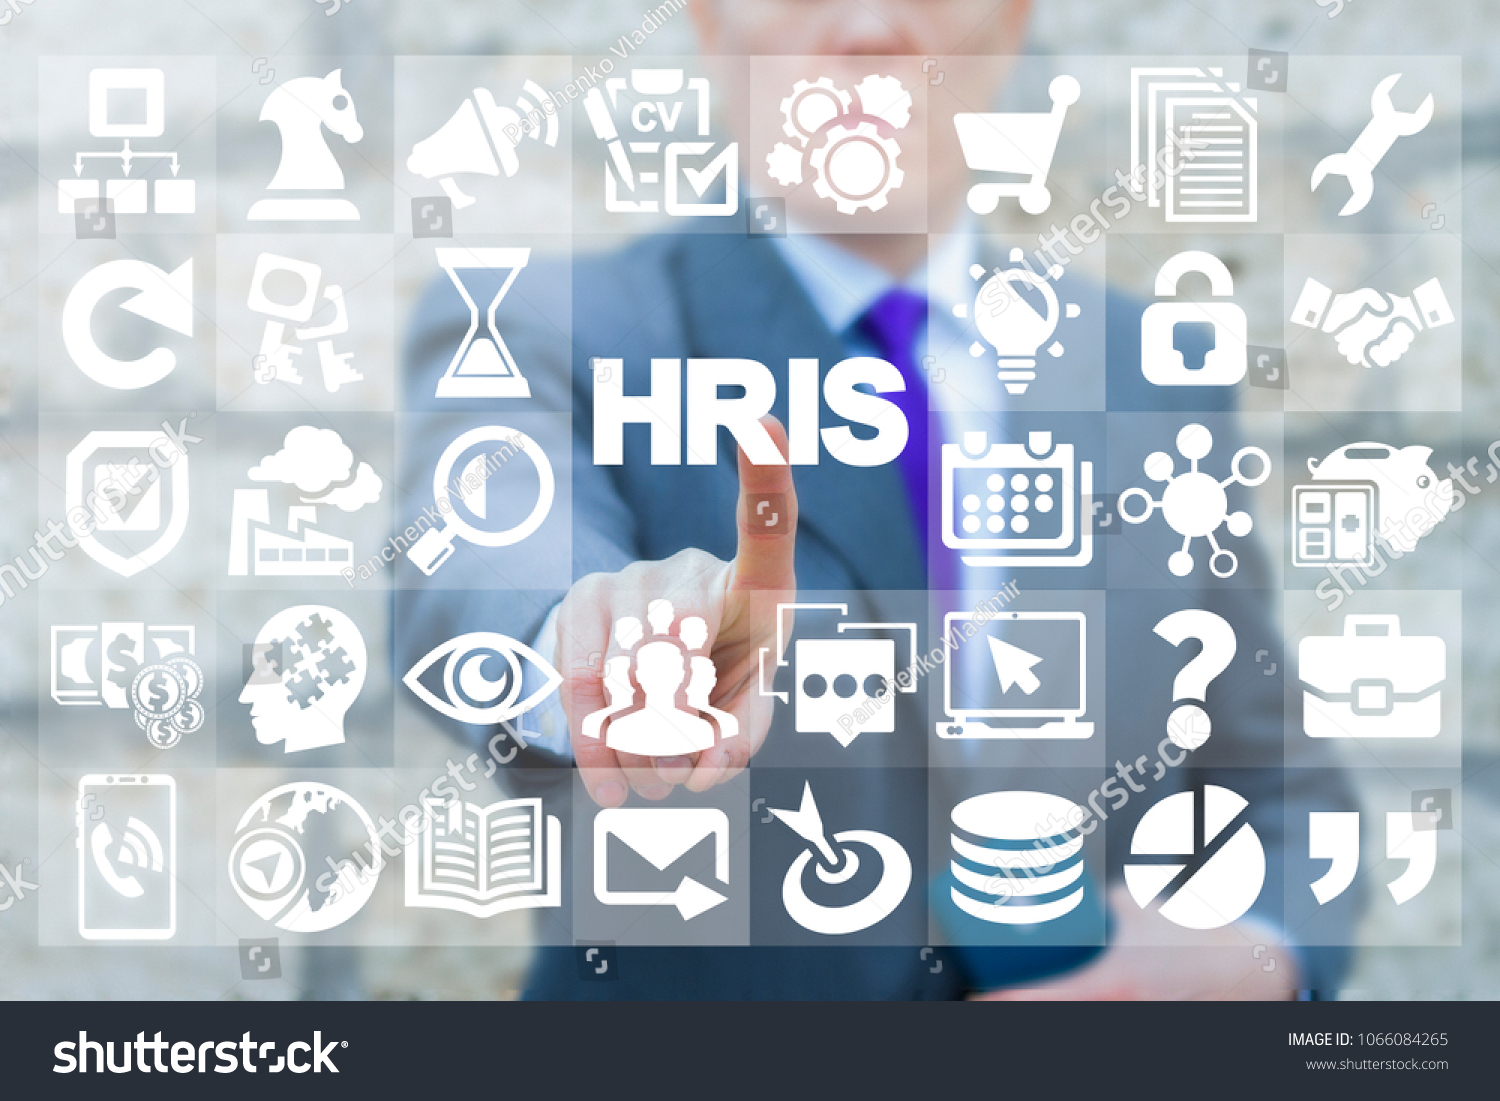 Hris Human Resources Information System Hr Stock Photo Edit Now 1066084265